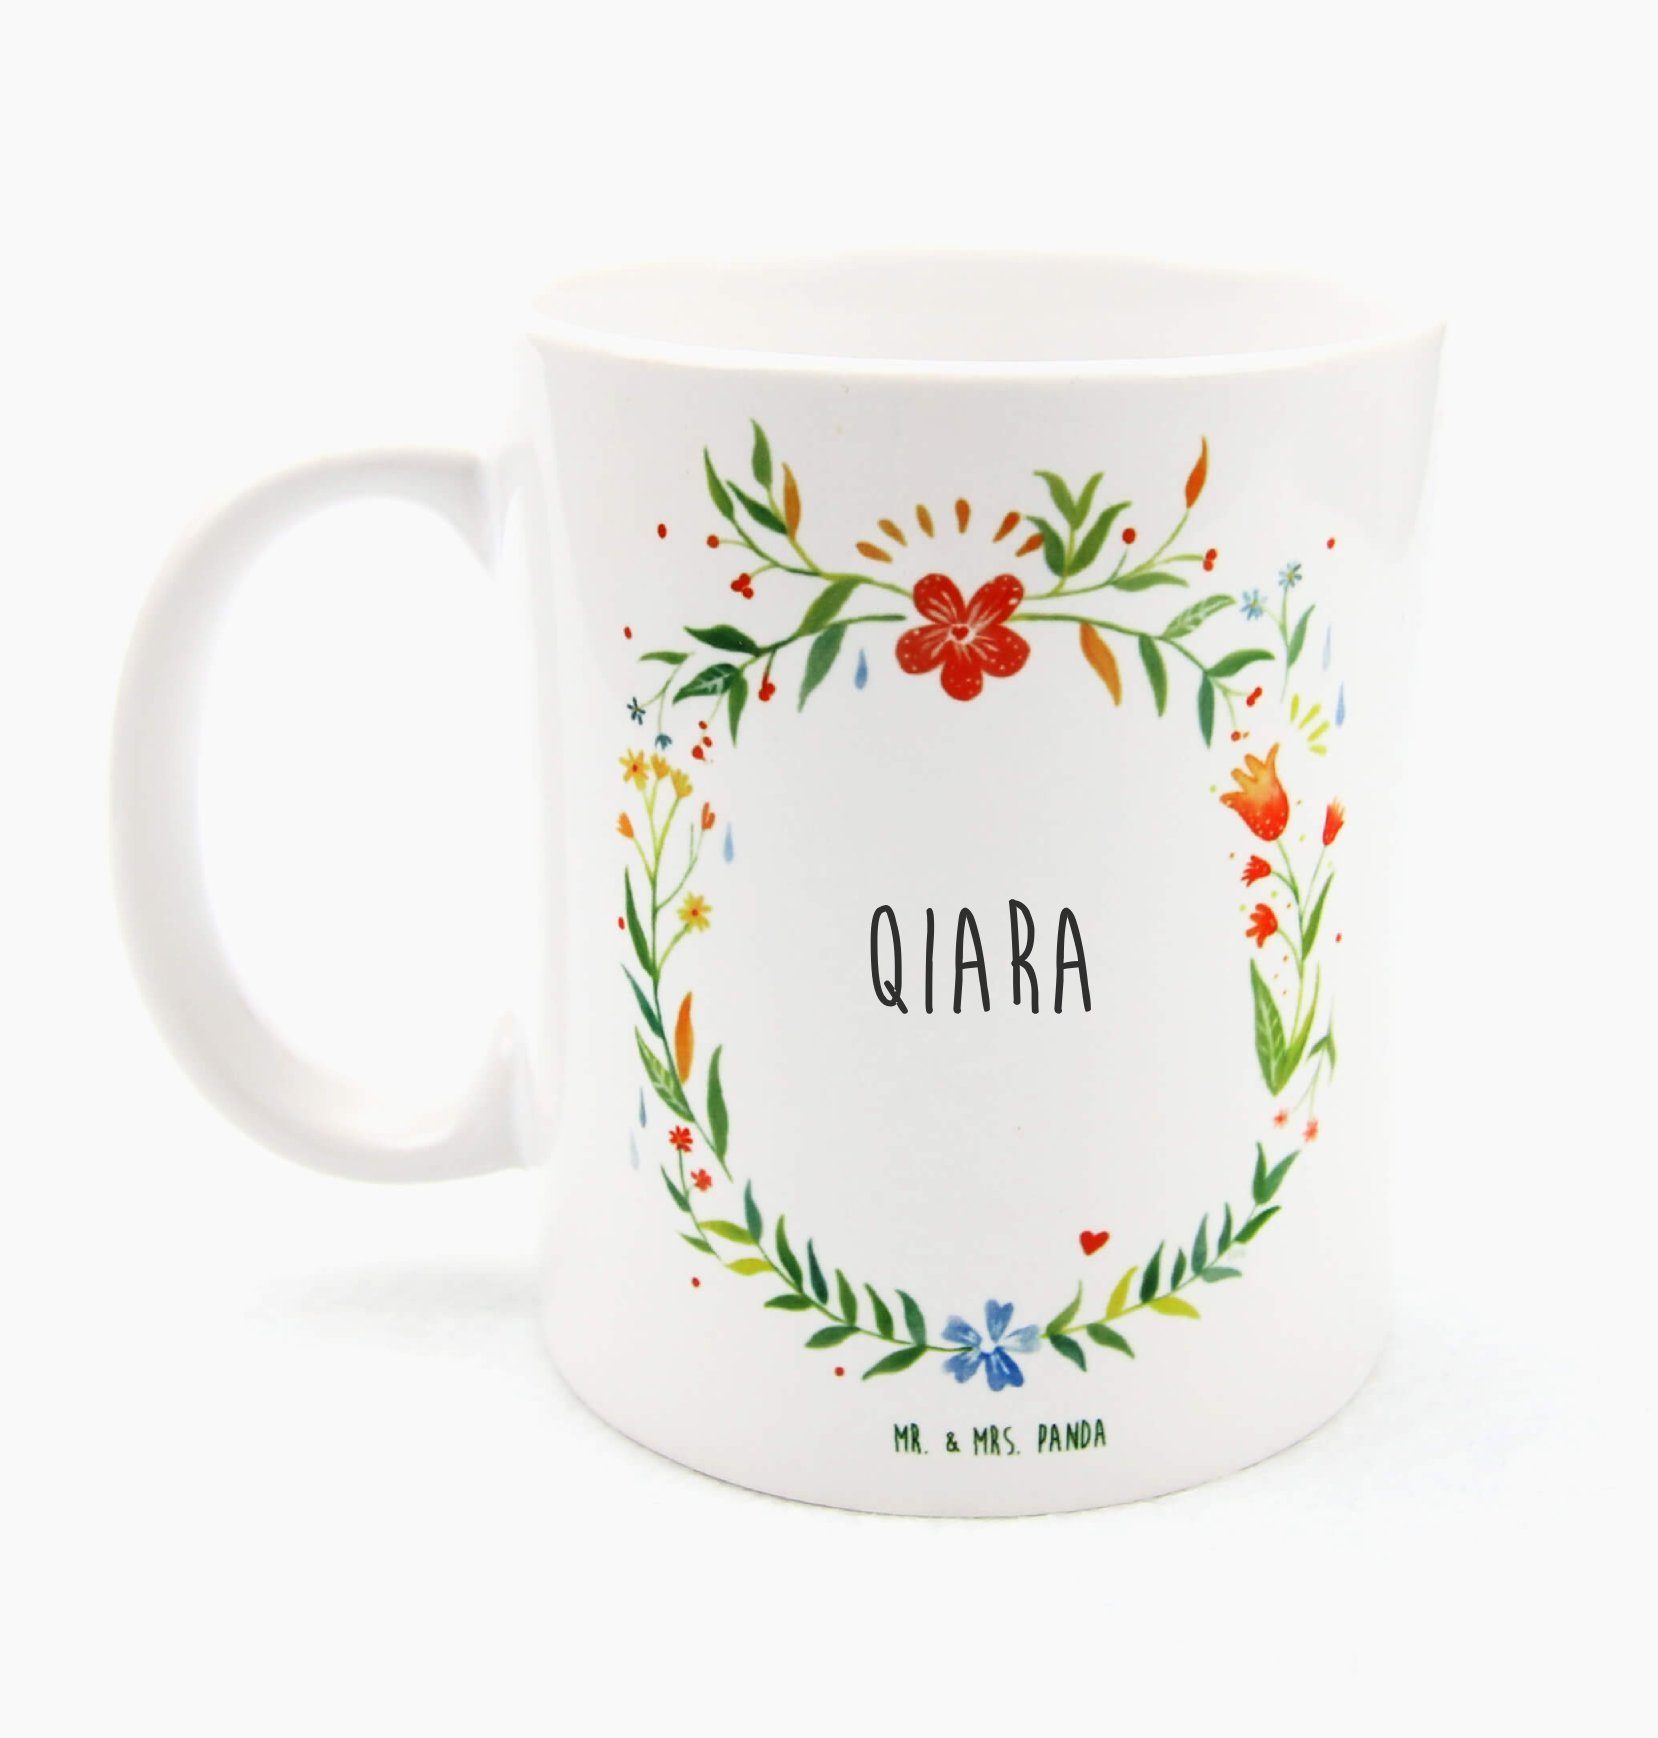 Mr. & Mrs. Panda Tasse Qiara - Geschenk, Kaffeebecher, Keramiktasse, Büro Tasse, Becher, Tee, Keramik